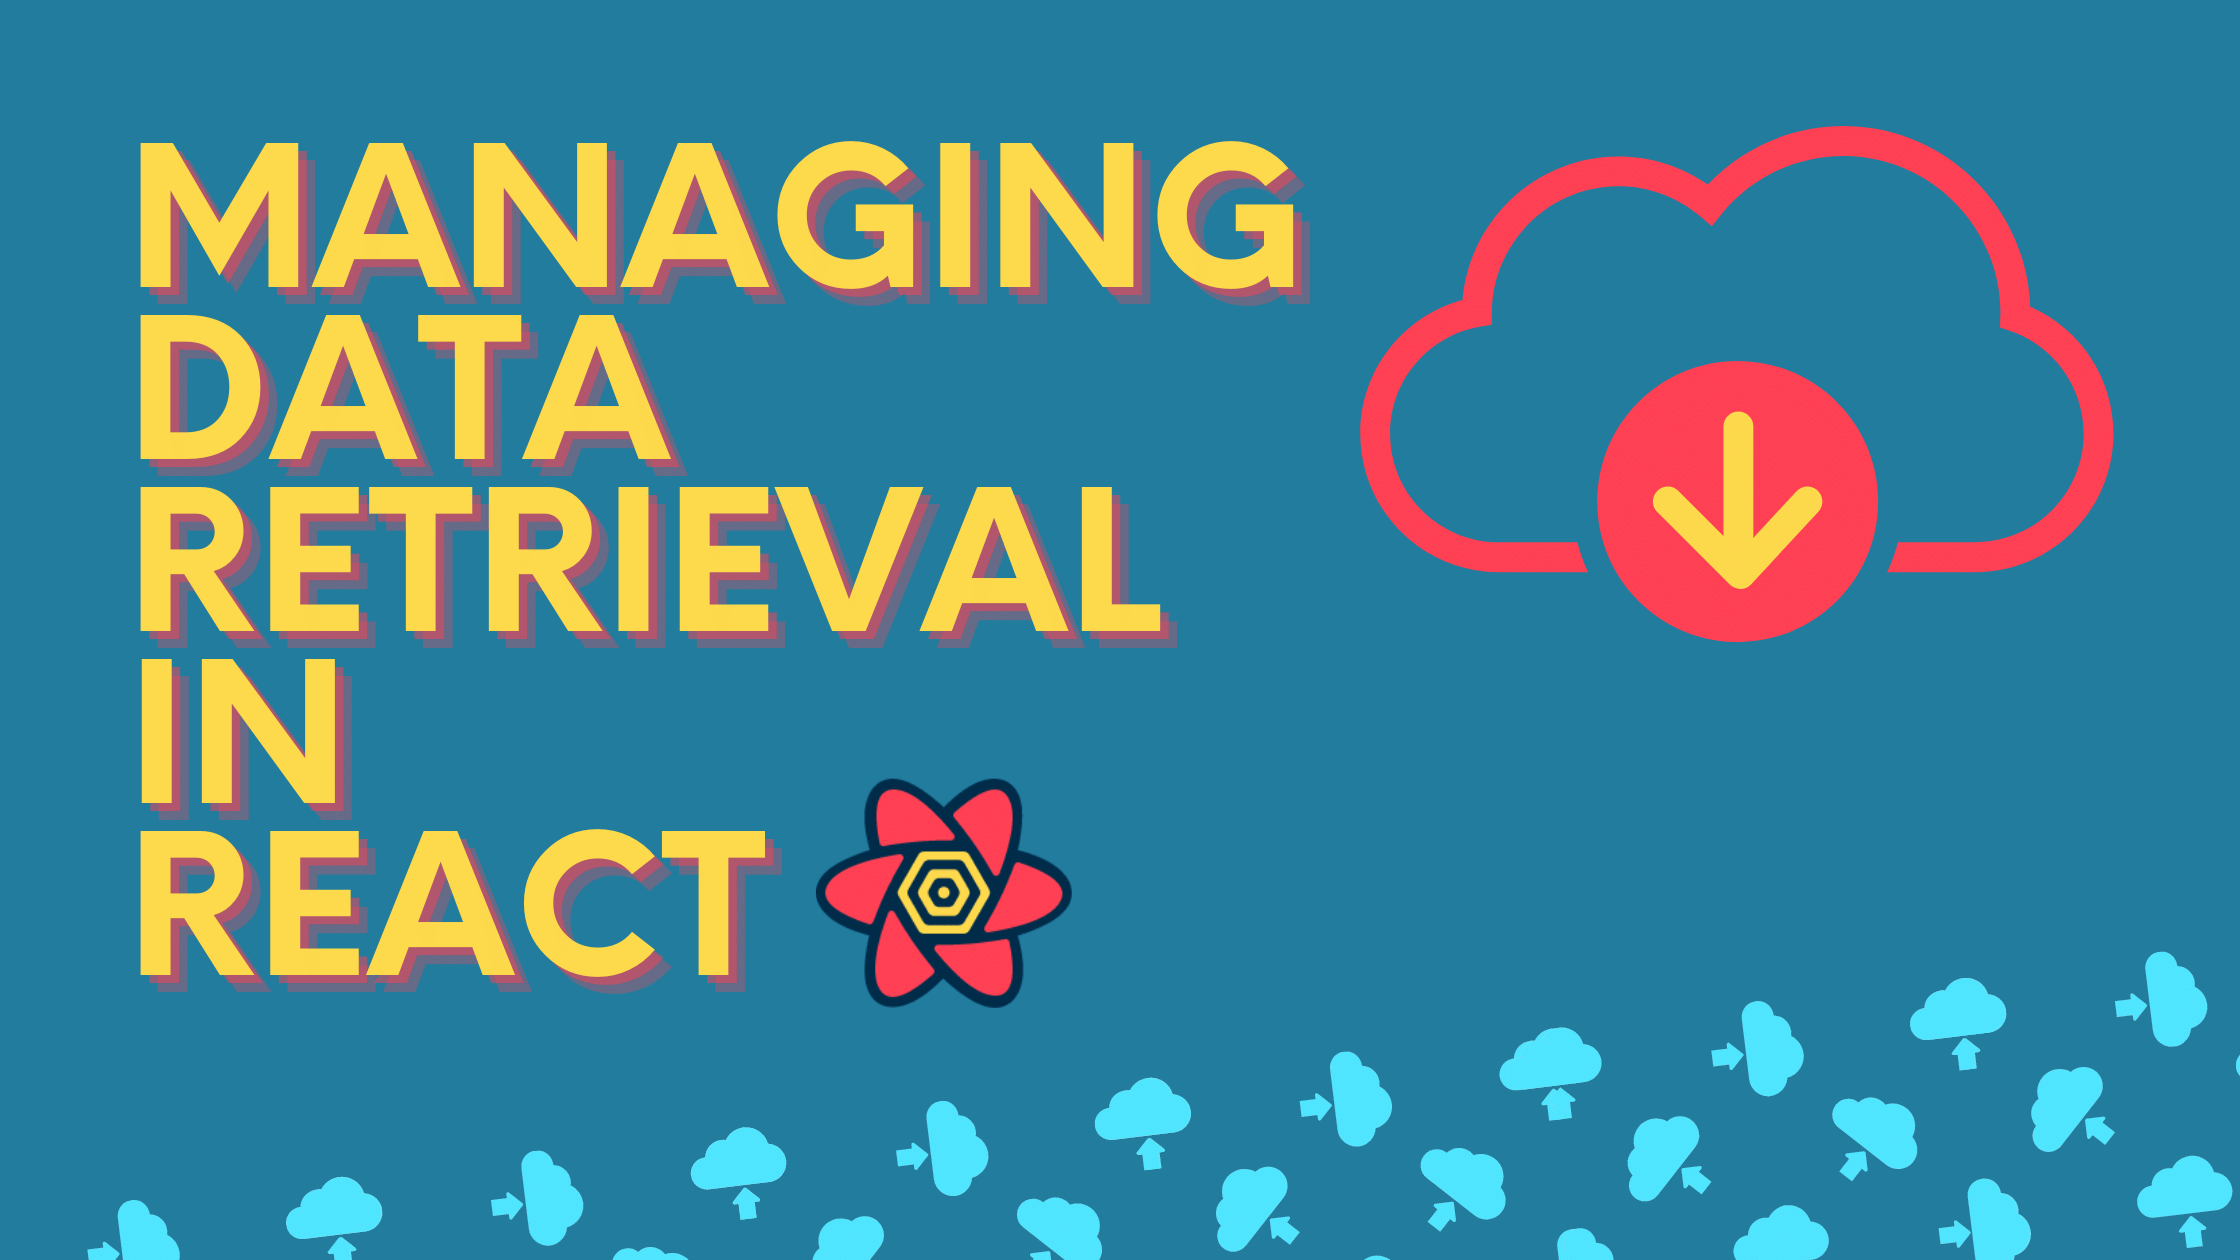 Managing data retrieval in React